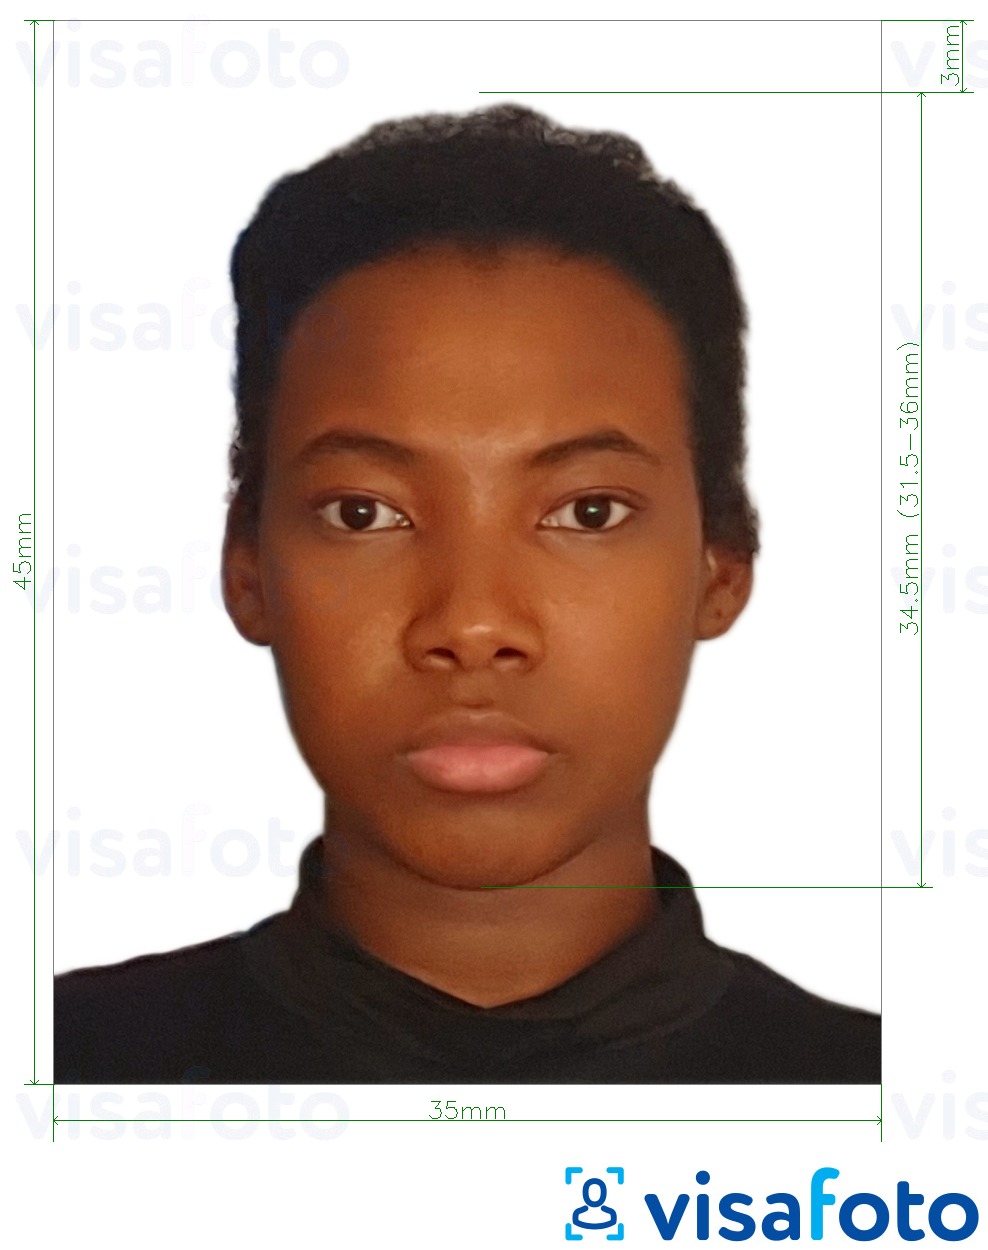 Shembulli i fotos per Pasaporta Malawi 4.5x3.5 cm (45x35 mm) me specifikimet ekzakte